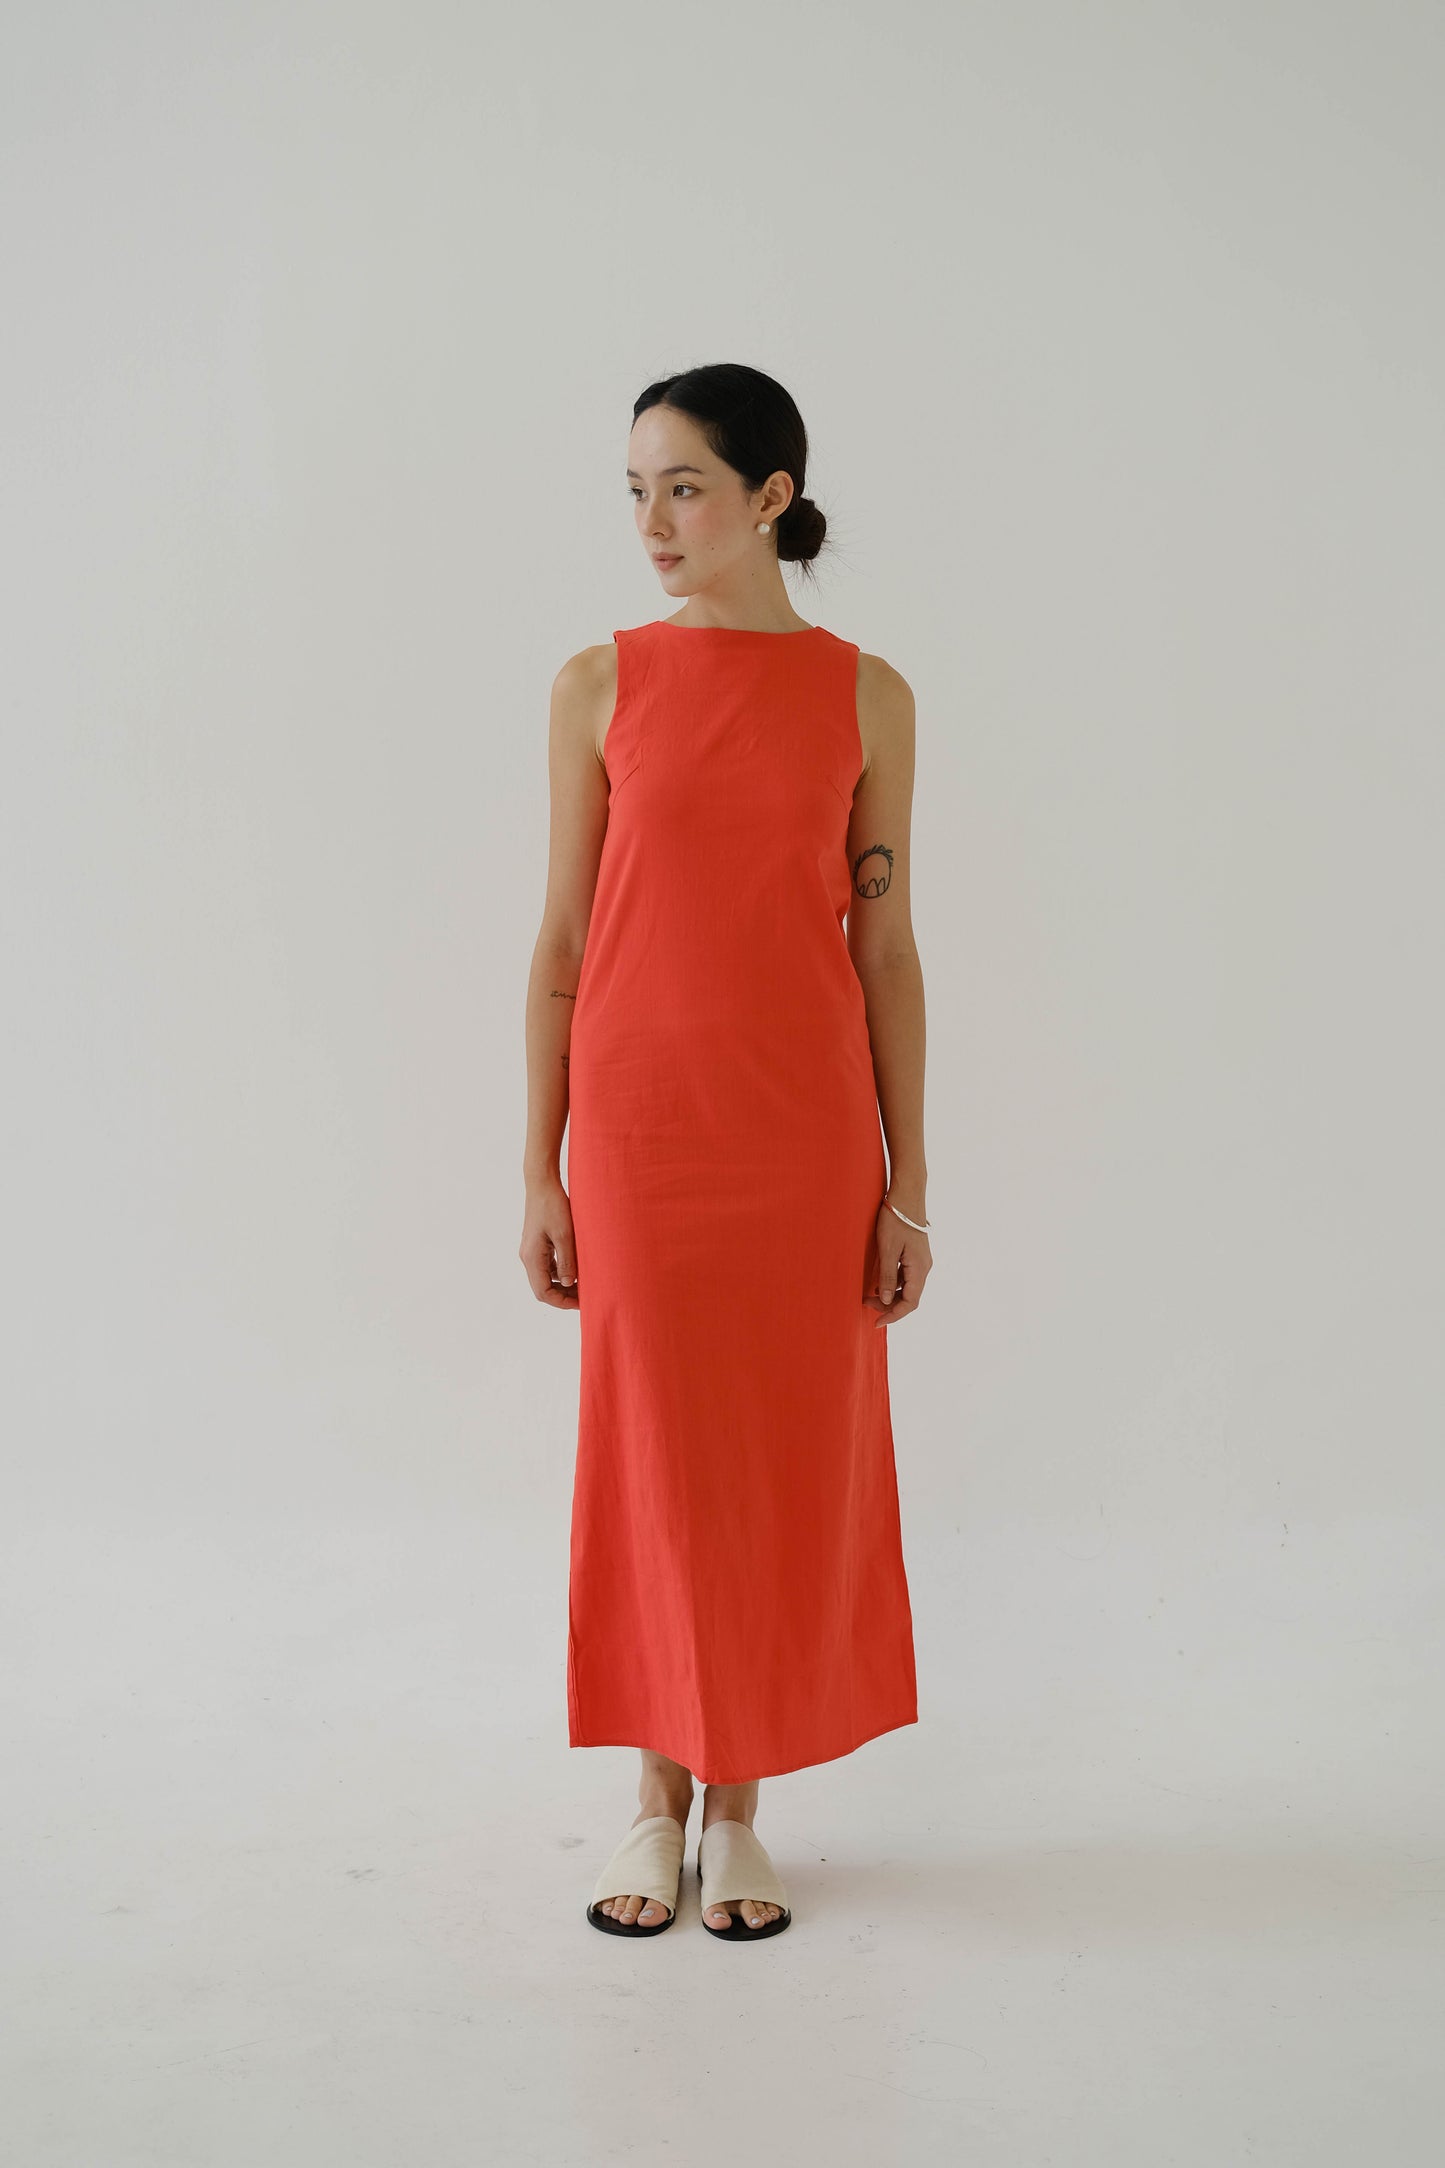 French cotton linen tank dress in orange